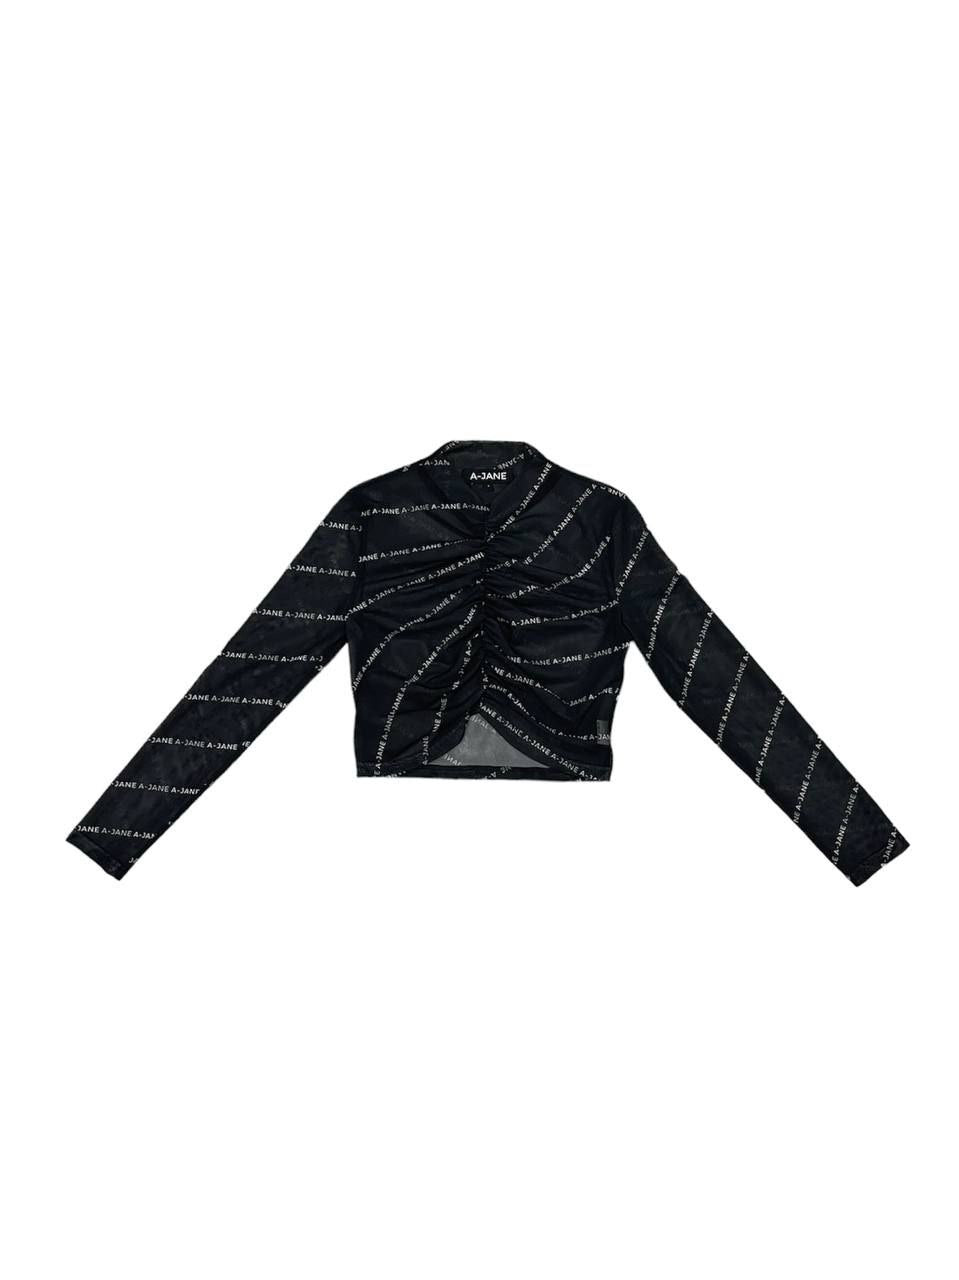 A-Jane Digi Gather Logo Long Sleeves Crop Top - Black